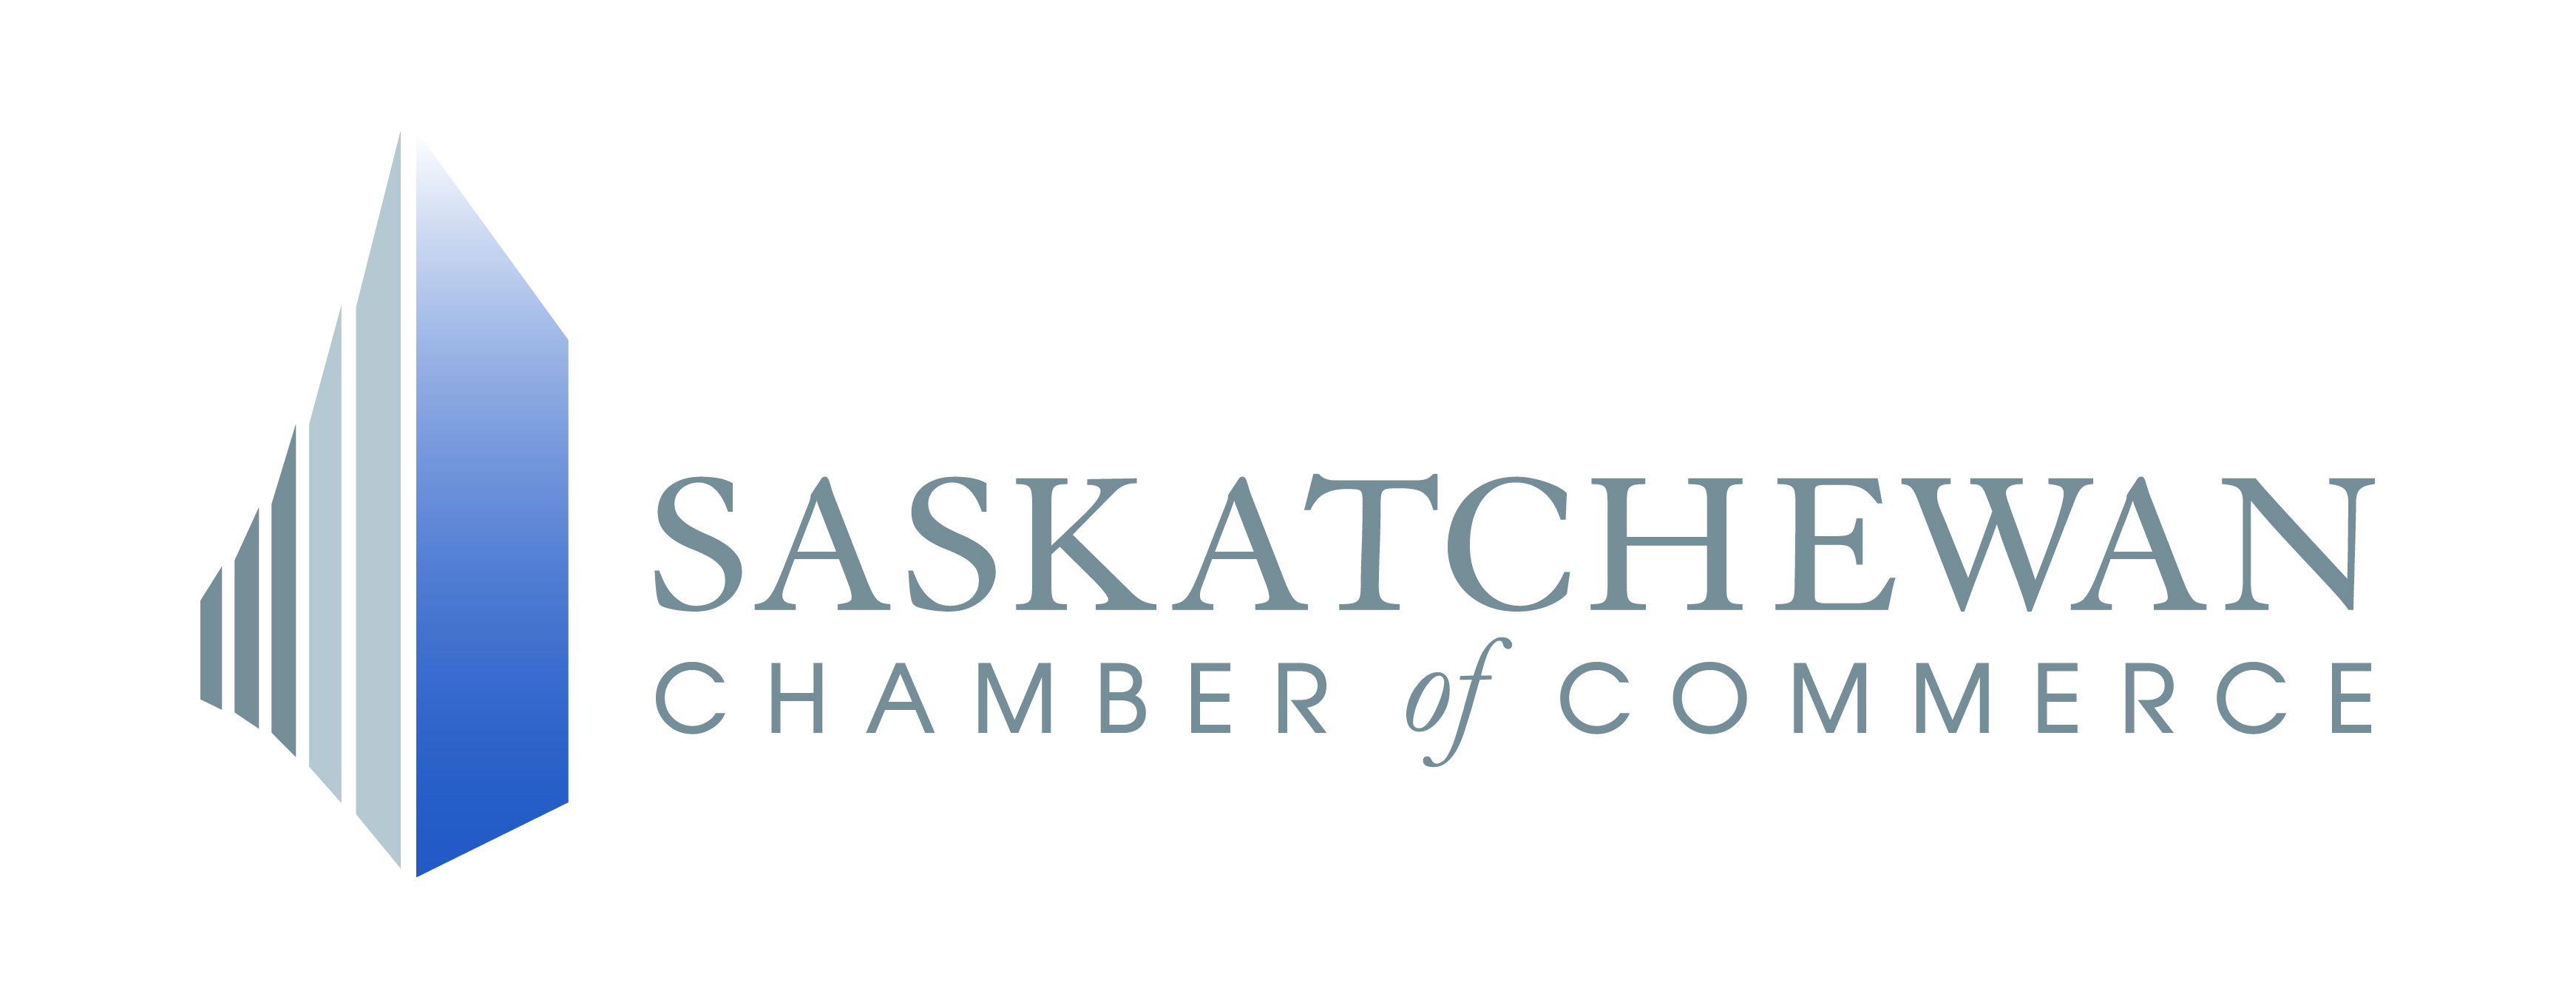 Saskatchewan Chamber of Commerce Undertaking Business Competitiveness Study